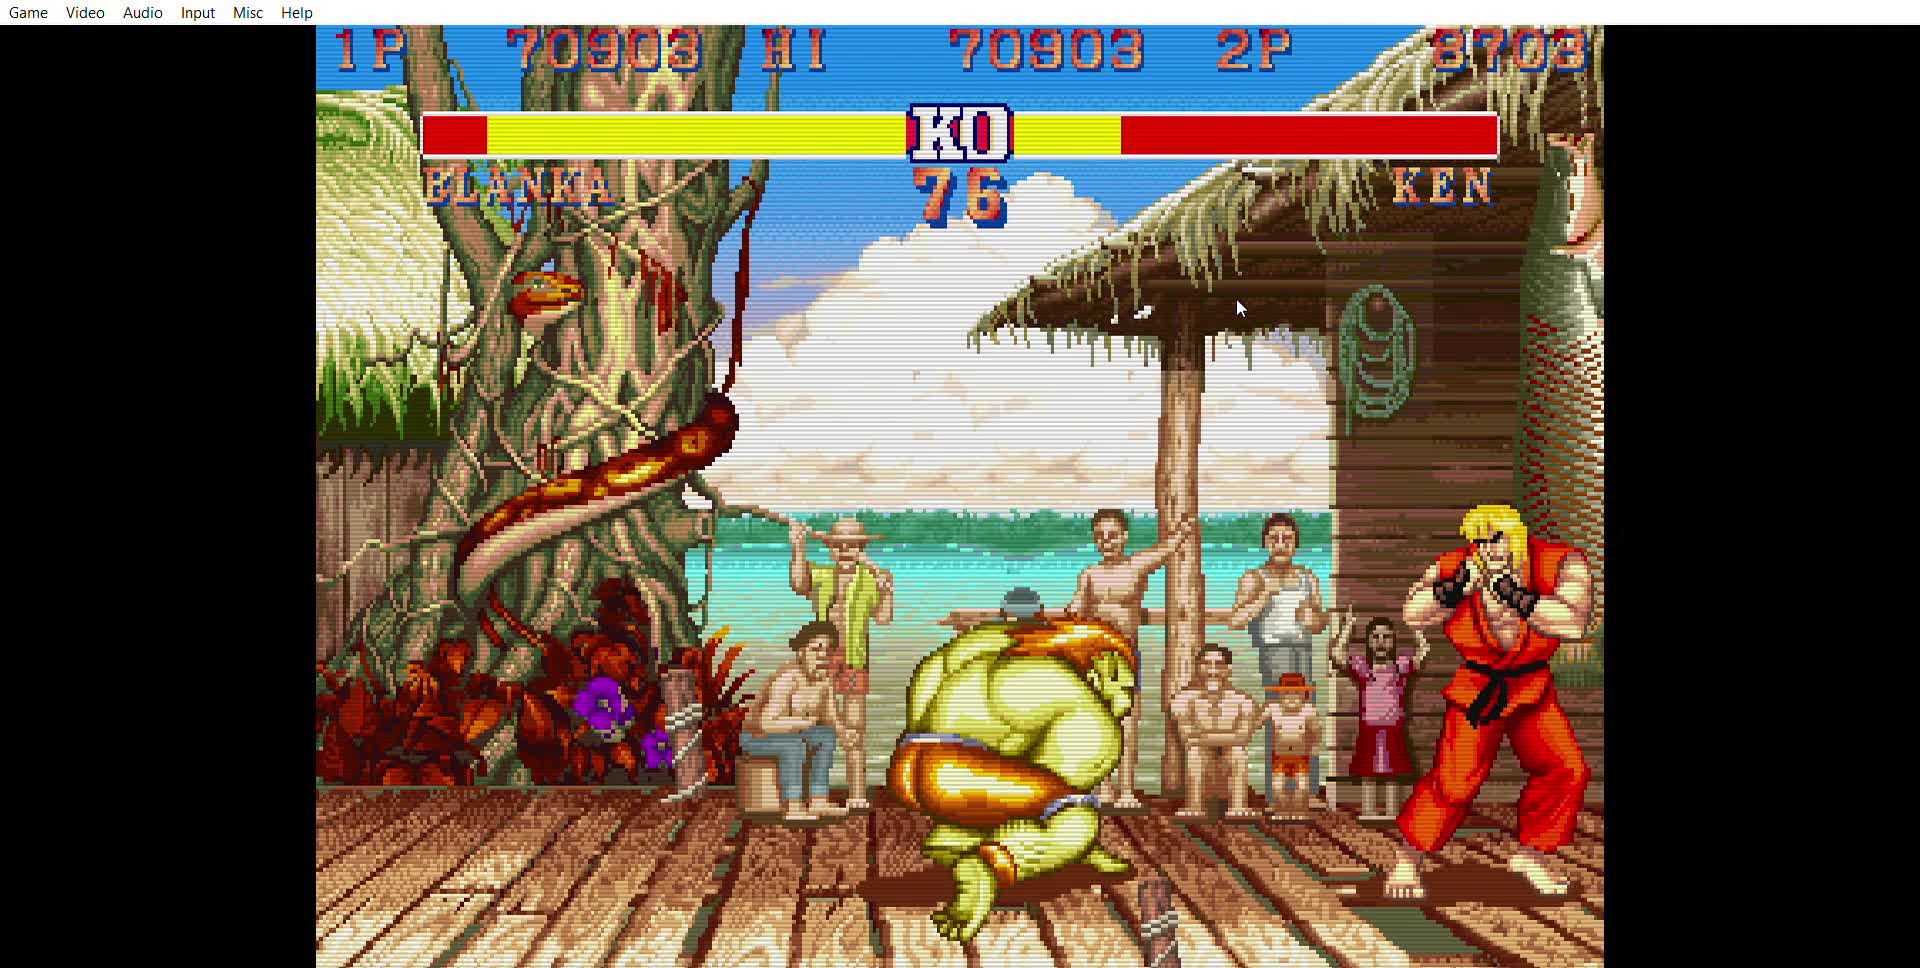 Street Fighter II - Champion Edition - Blanka (Arcade) 